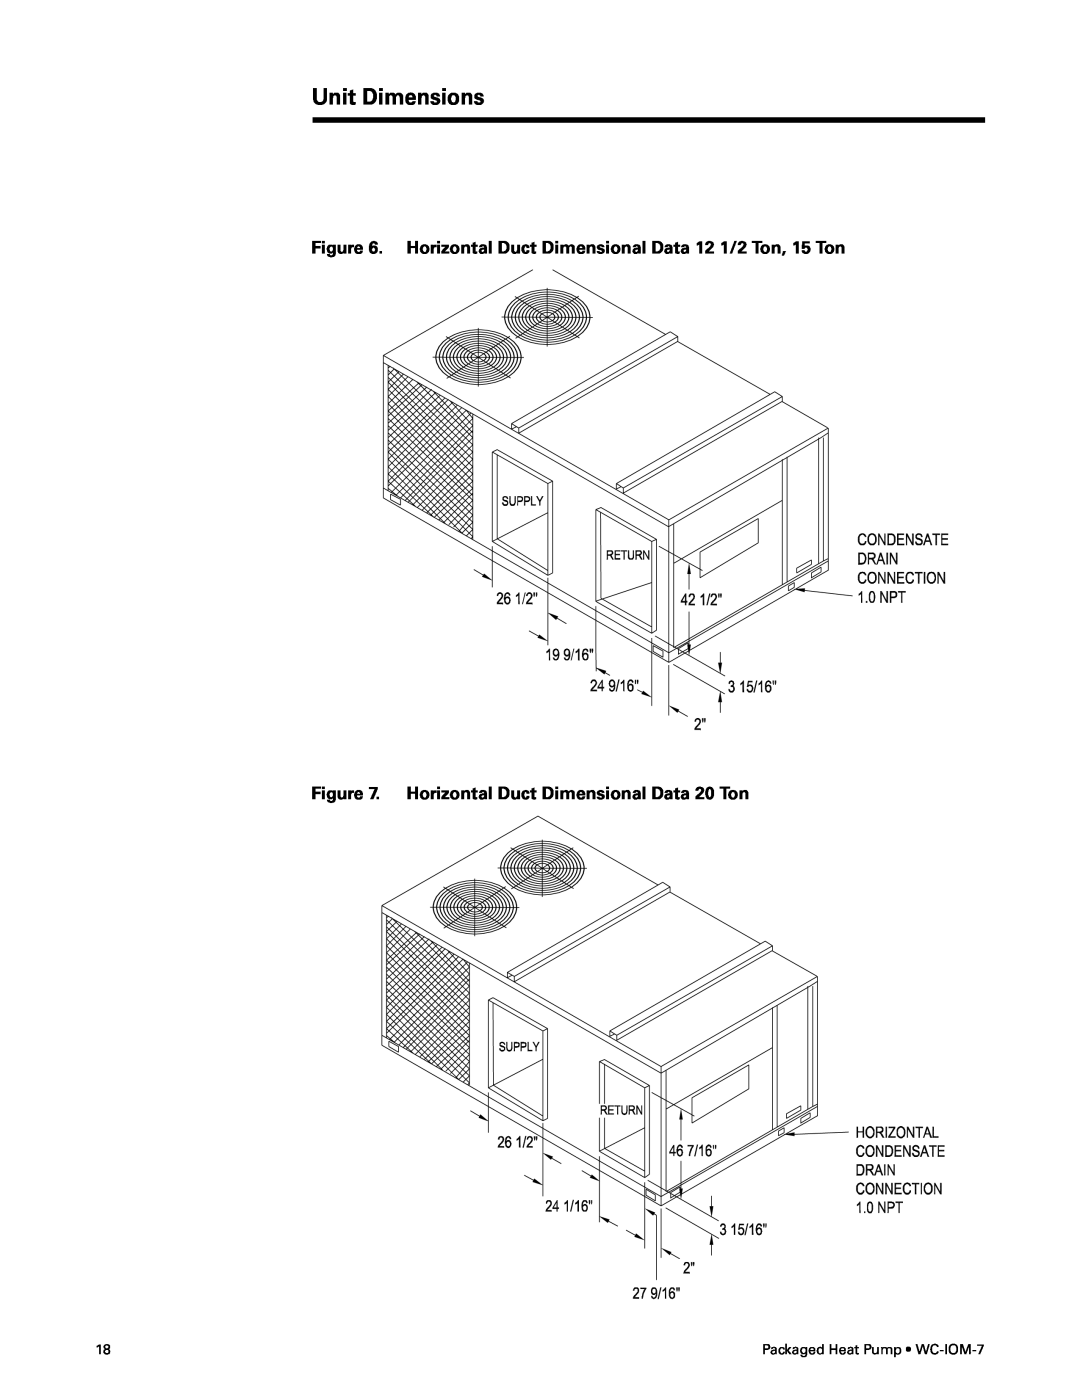 Trane manual Horizontal Duct Dimensional Data 20 Ton, Unit Dimensions, Packaged Heat Pump WC-IOM-7 